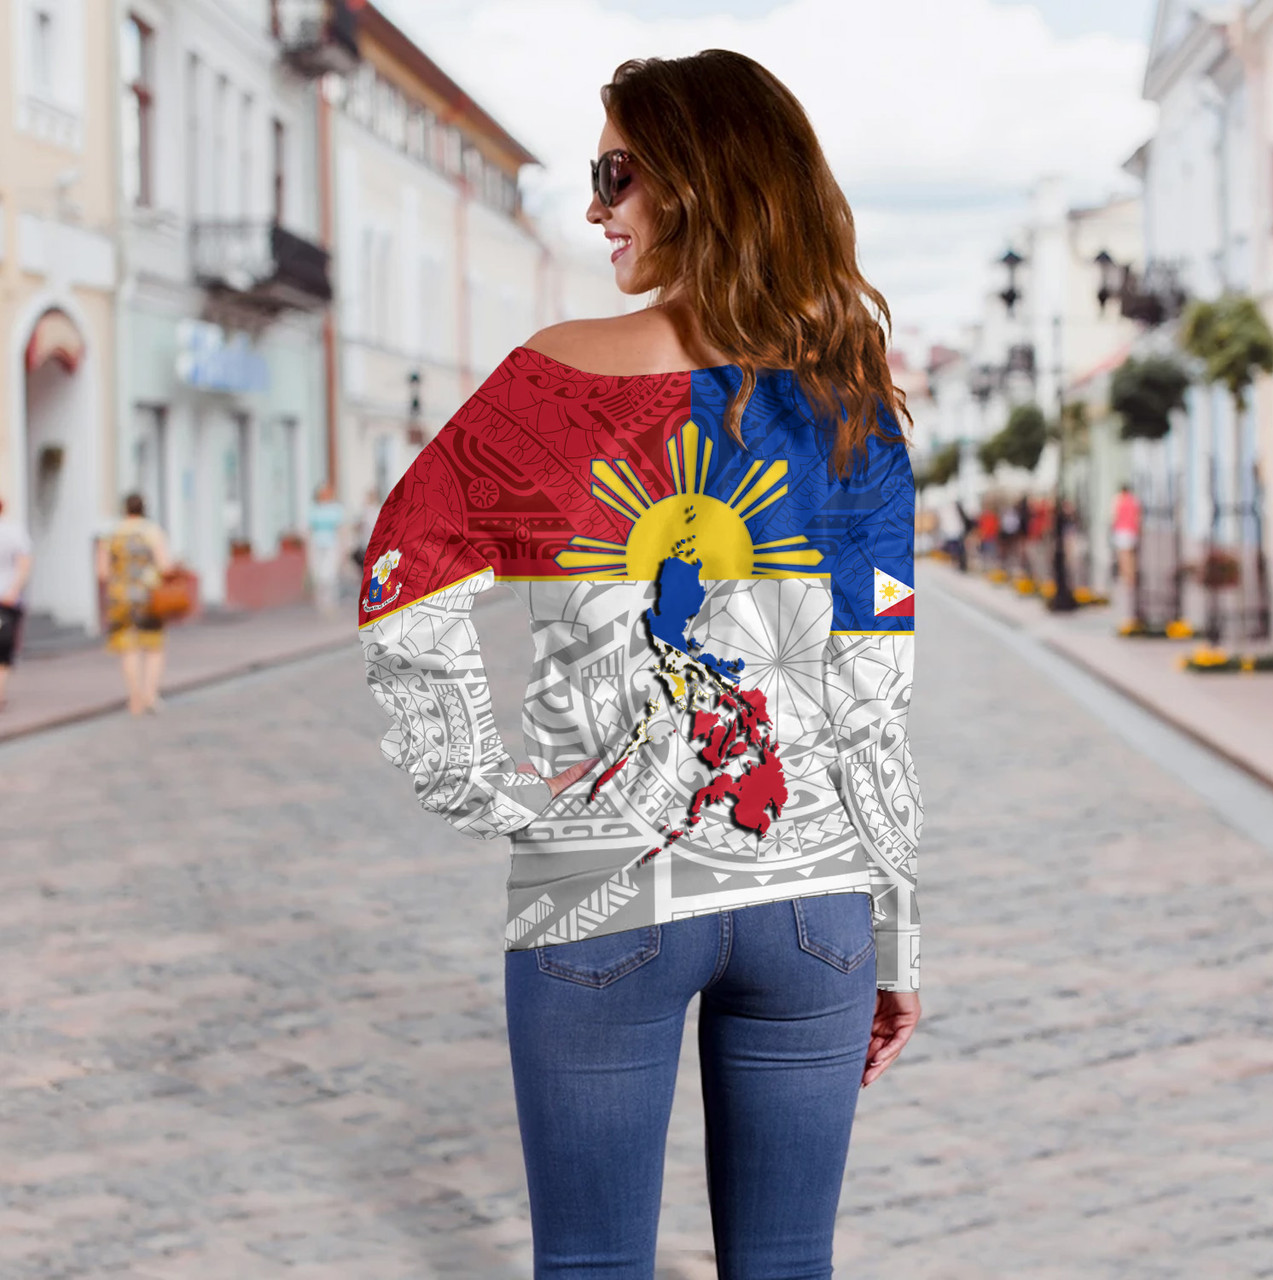 Philippines Filipinos Off Shoulder Sweatshirt National Heroes Day